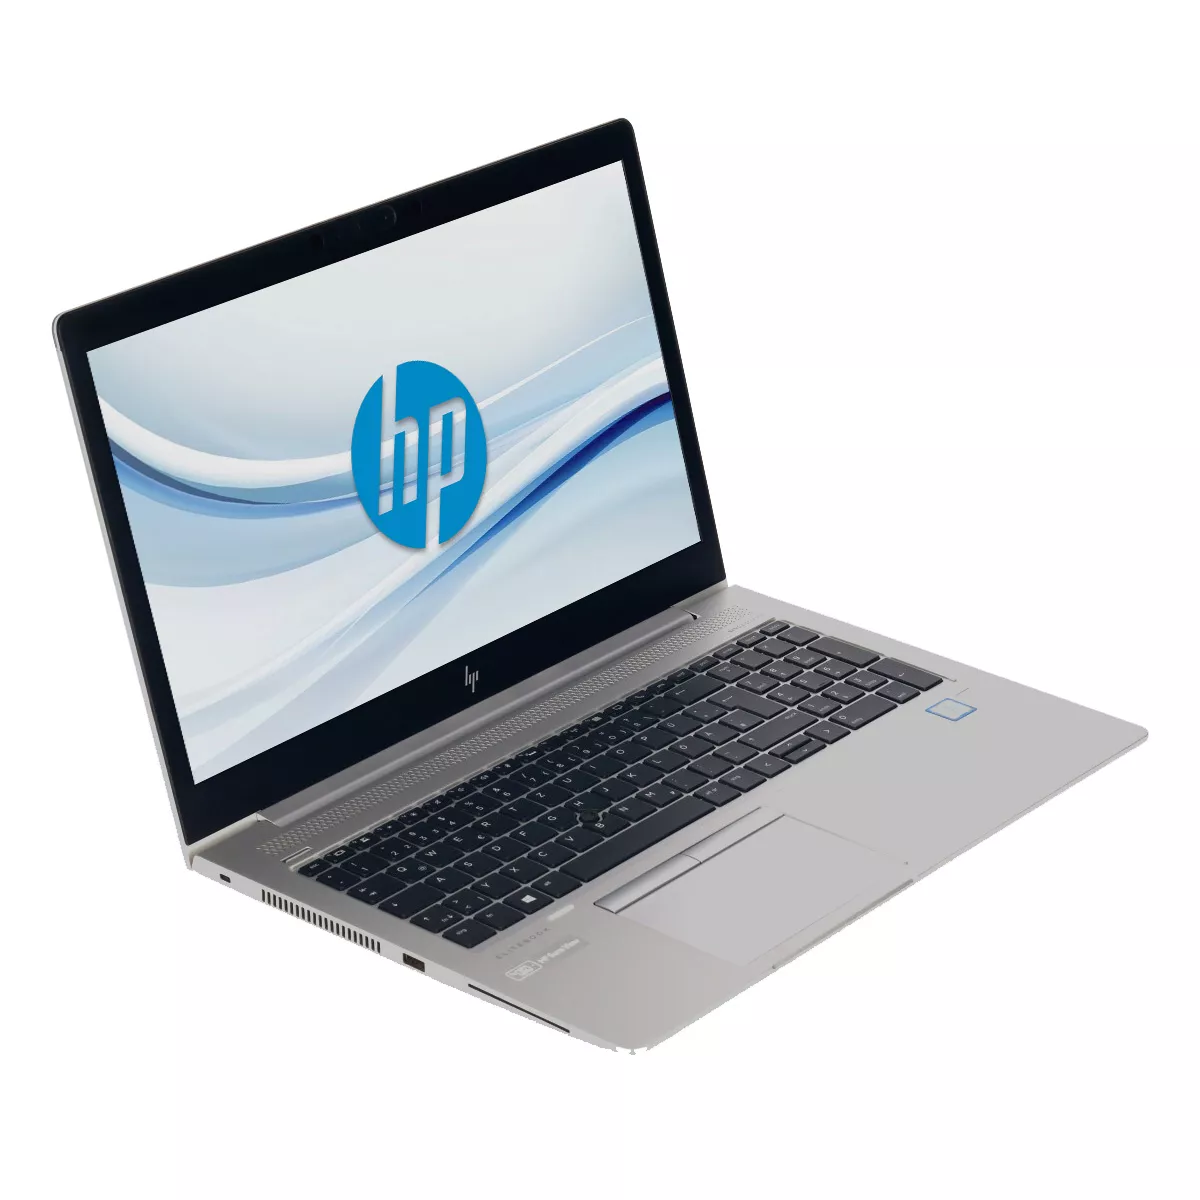 HP EliteBook 840 G5 Core i5 8350U Full-HD 240 GB M.2 SSD Webcam B